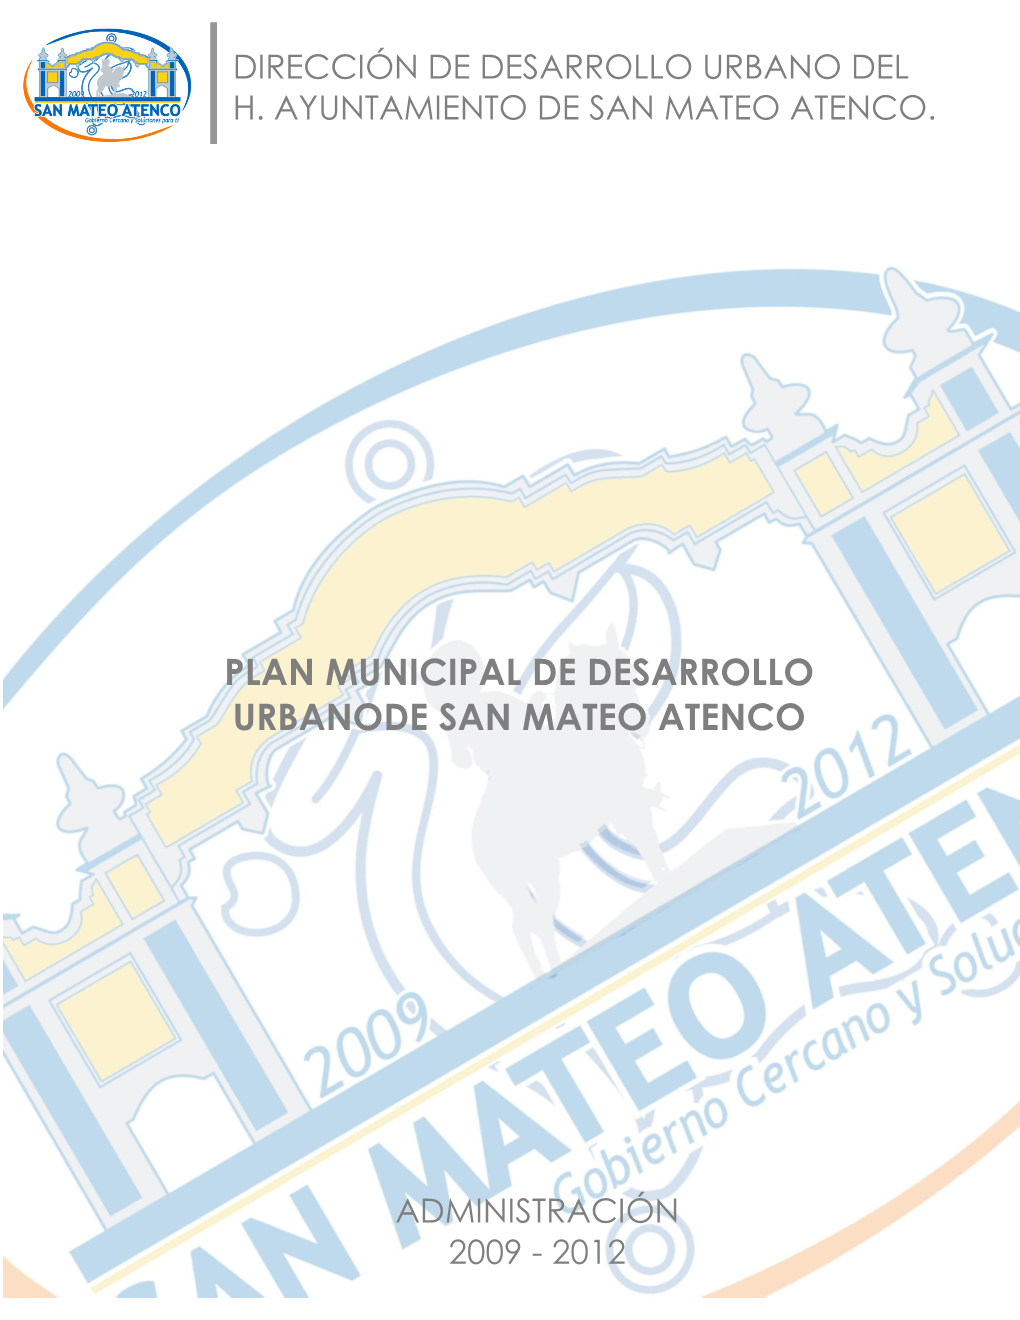 Plan Municipal De Desarrollo Urbanode San Mateo Atenco